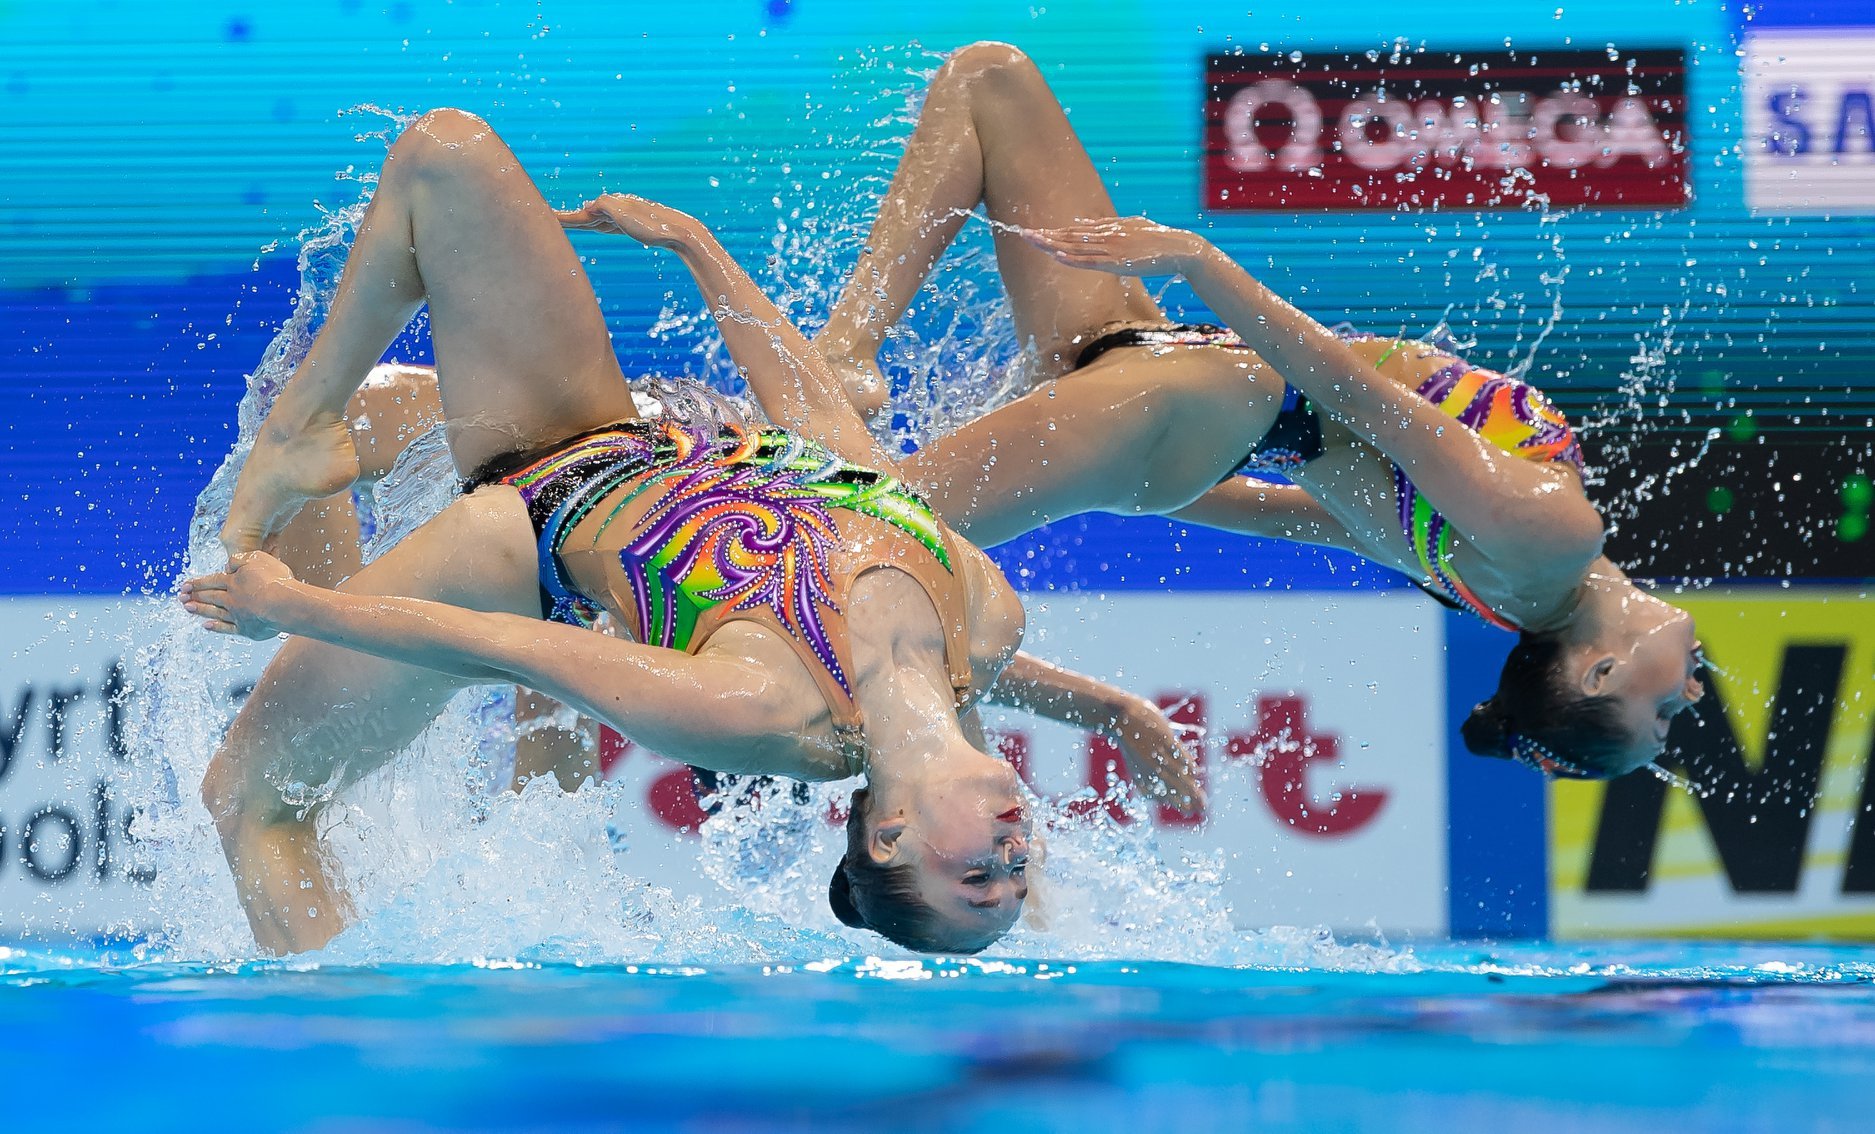 Сборная Украины по артистическому плаванию заняла 3-е место в технической программе на чемпионате мира